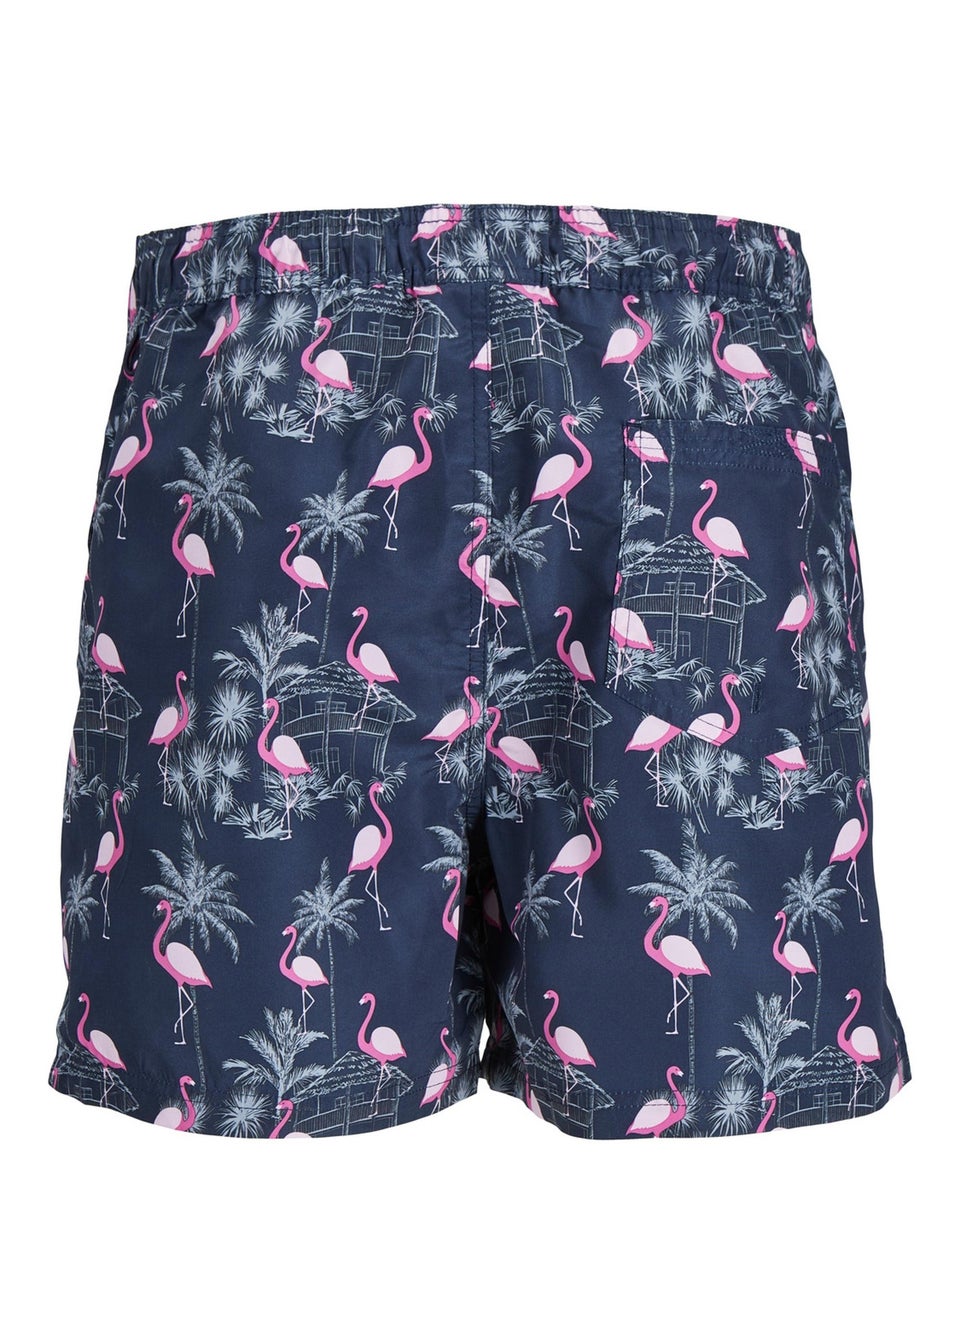 Jack & Jones Boys Navy Flamingo Swim Shorts (8-16yrs)